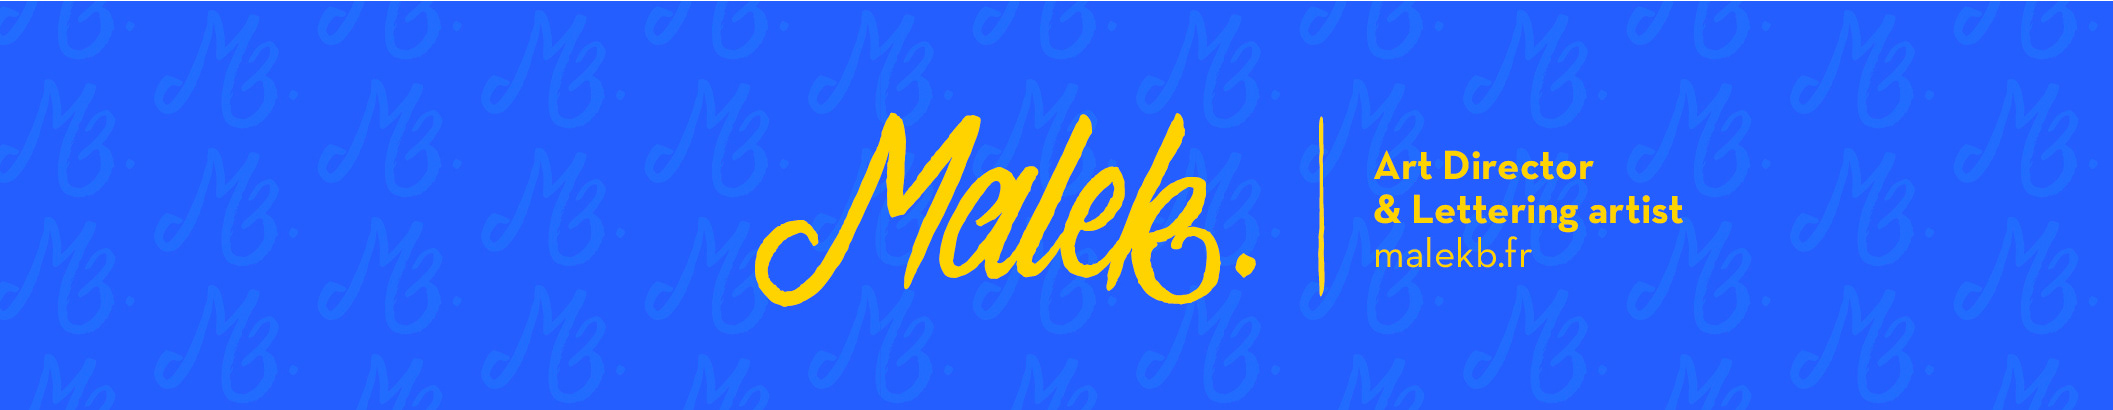 Malek B. のプロファイルバナー